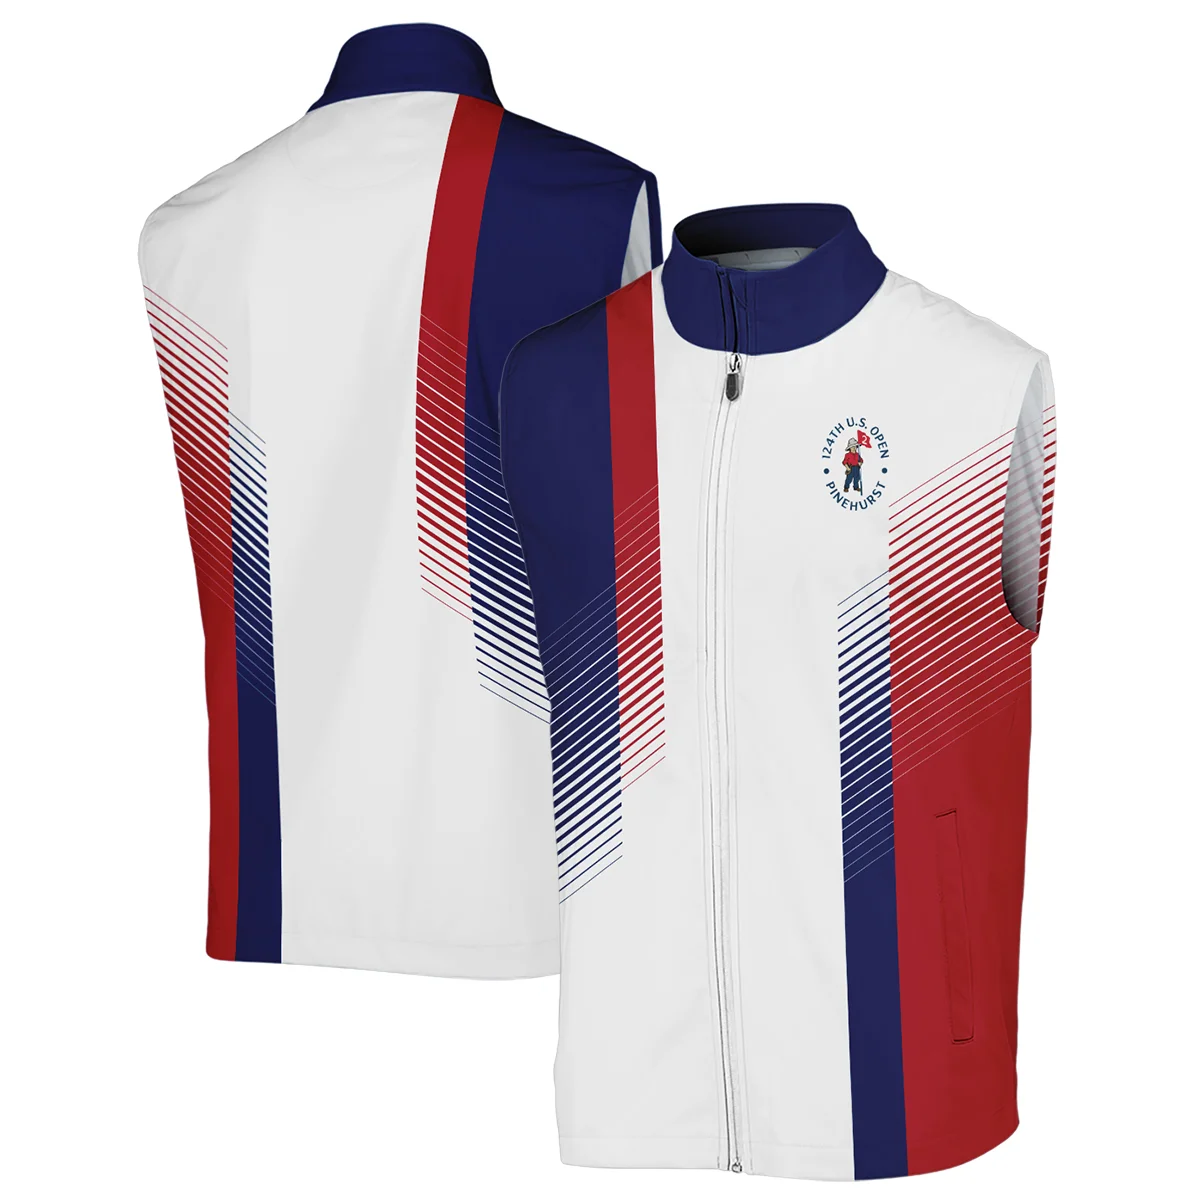 124th U.S. Open Pinehurst Sports Ping Polo Shirt Golf Blue Red All Over Print Polo Shirt For Men